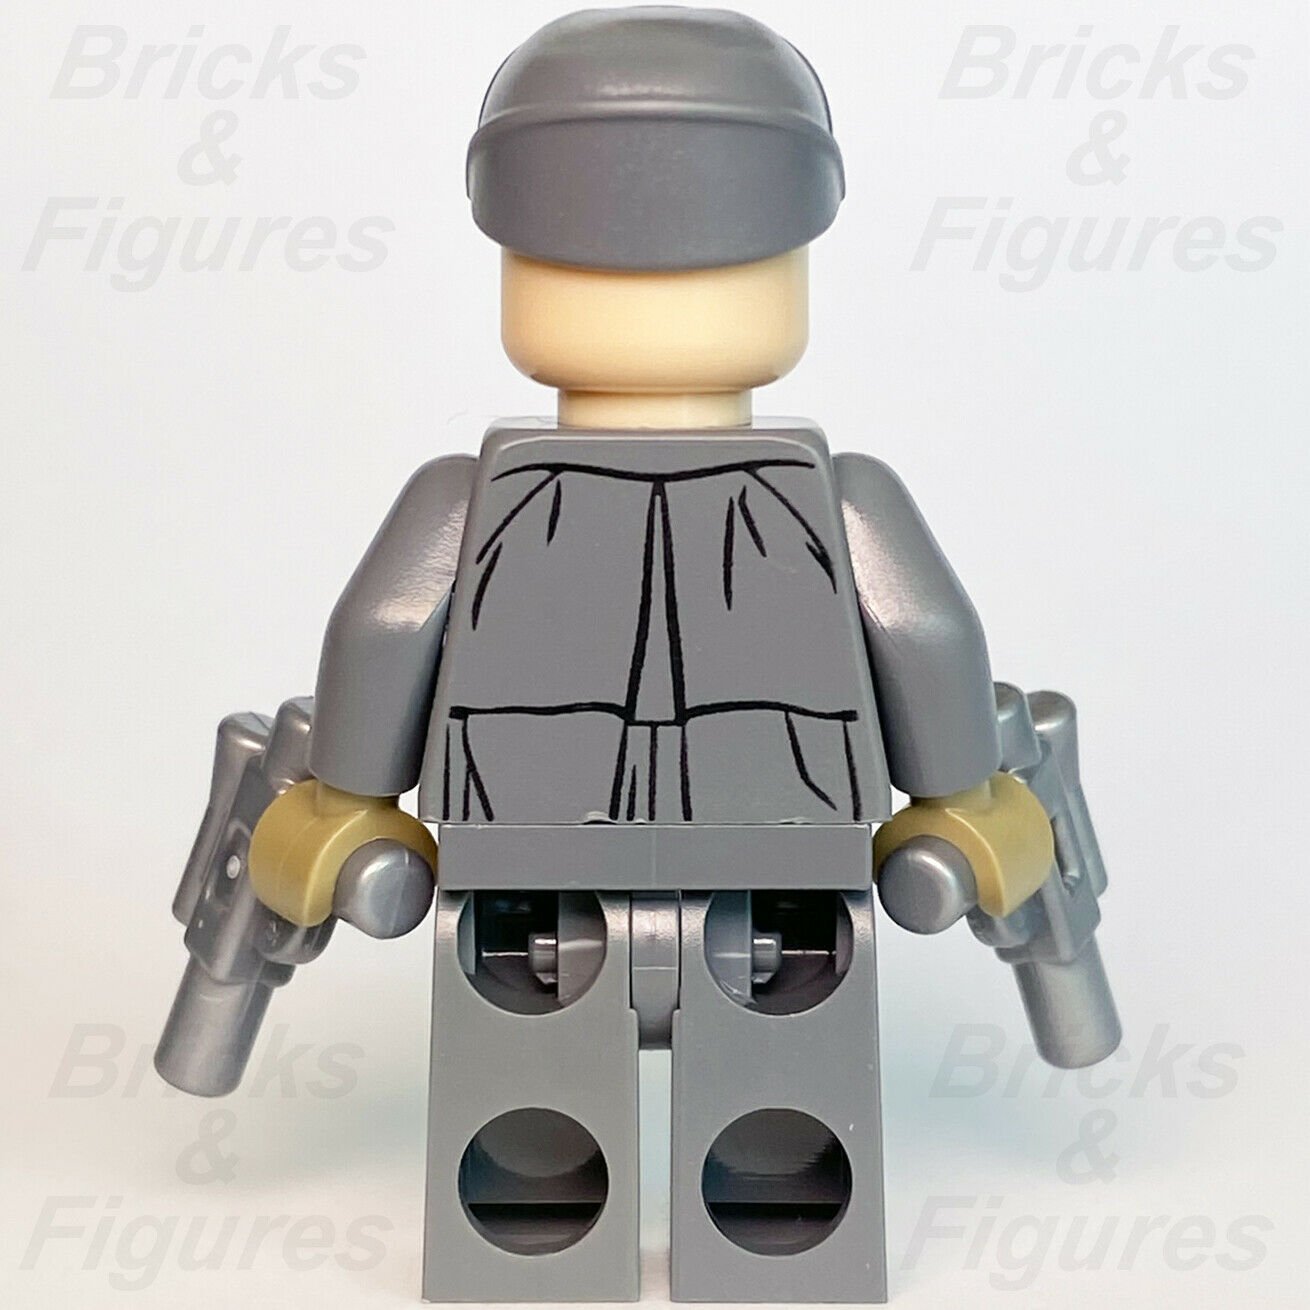 Star Wars LEGO Tobias Beckett Imperial Mudtrooper Captain Solo Minifigure 75211 - Bricks & Figures